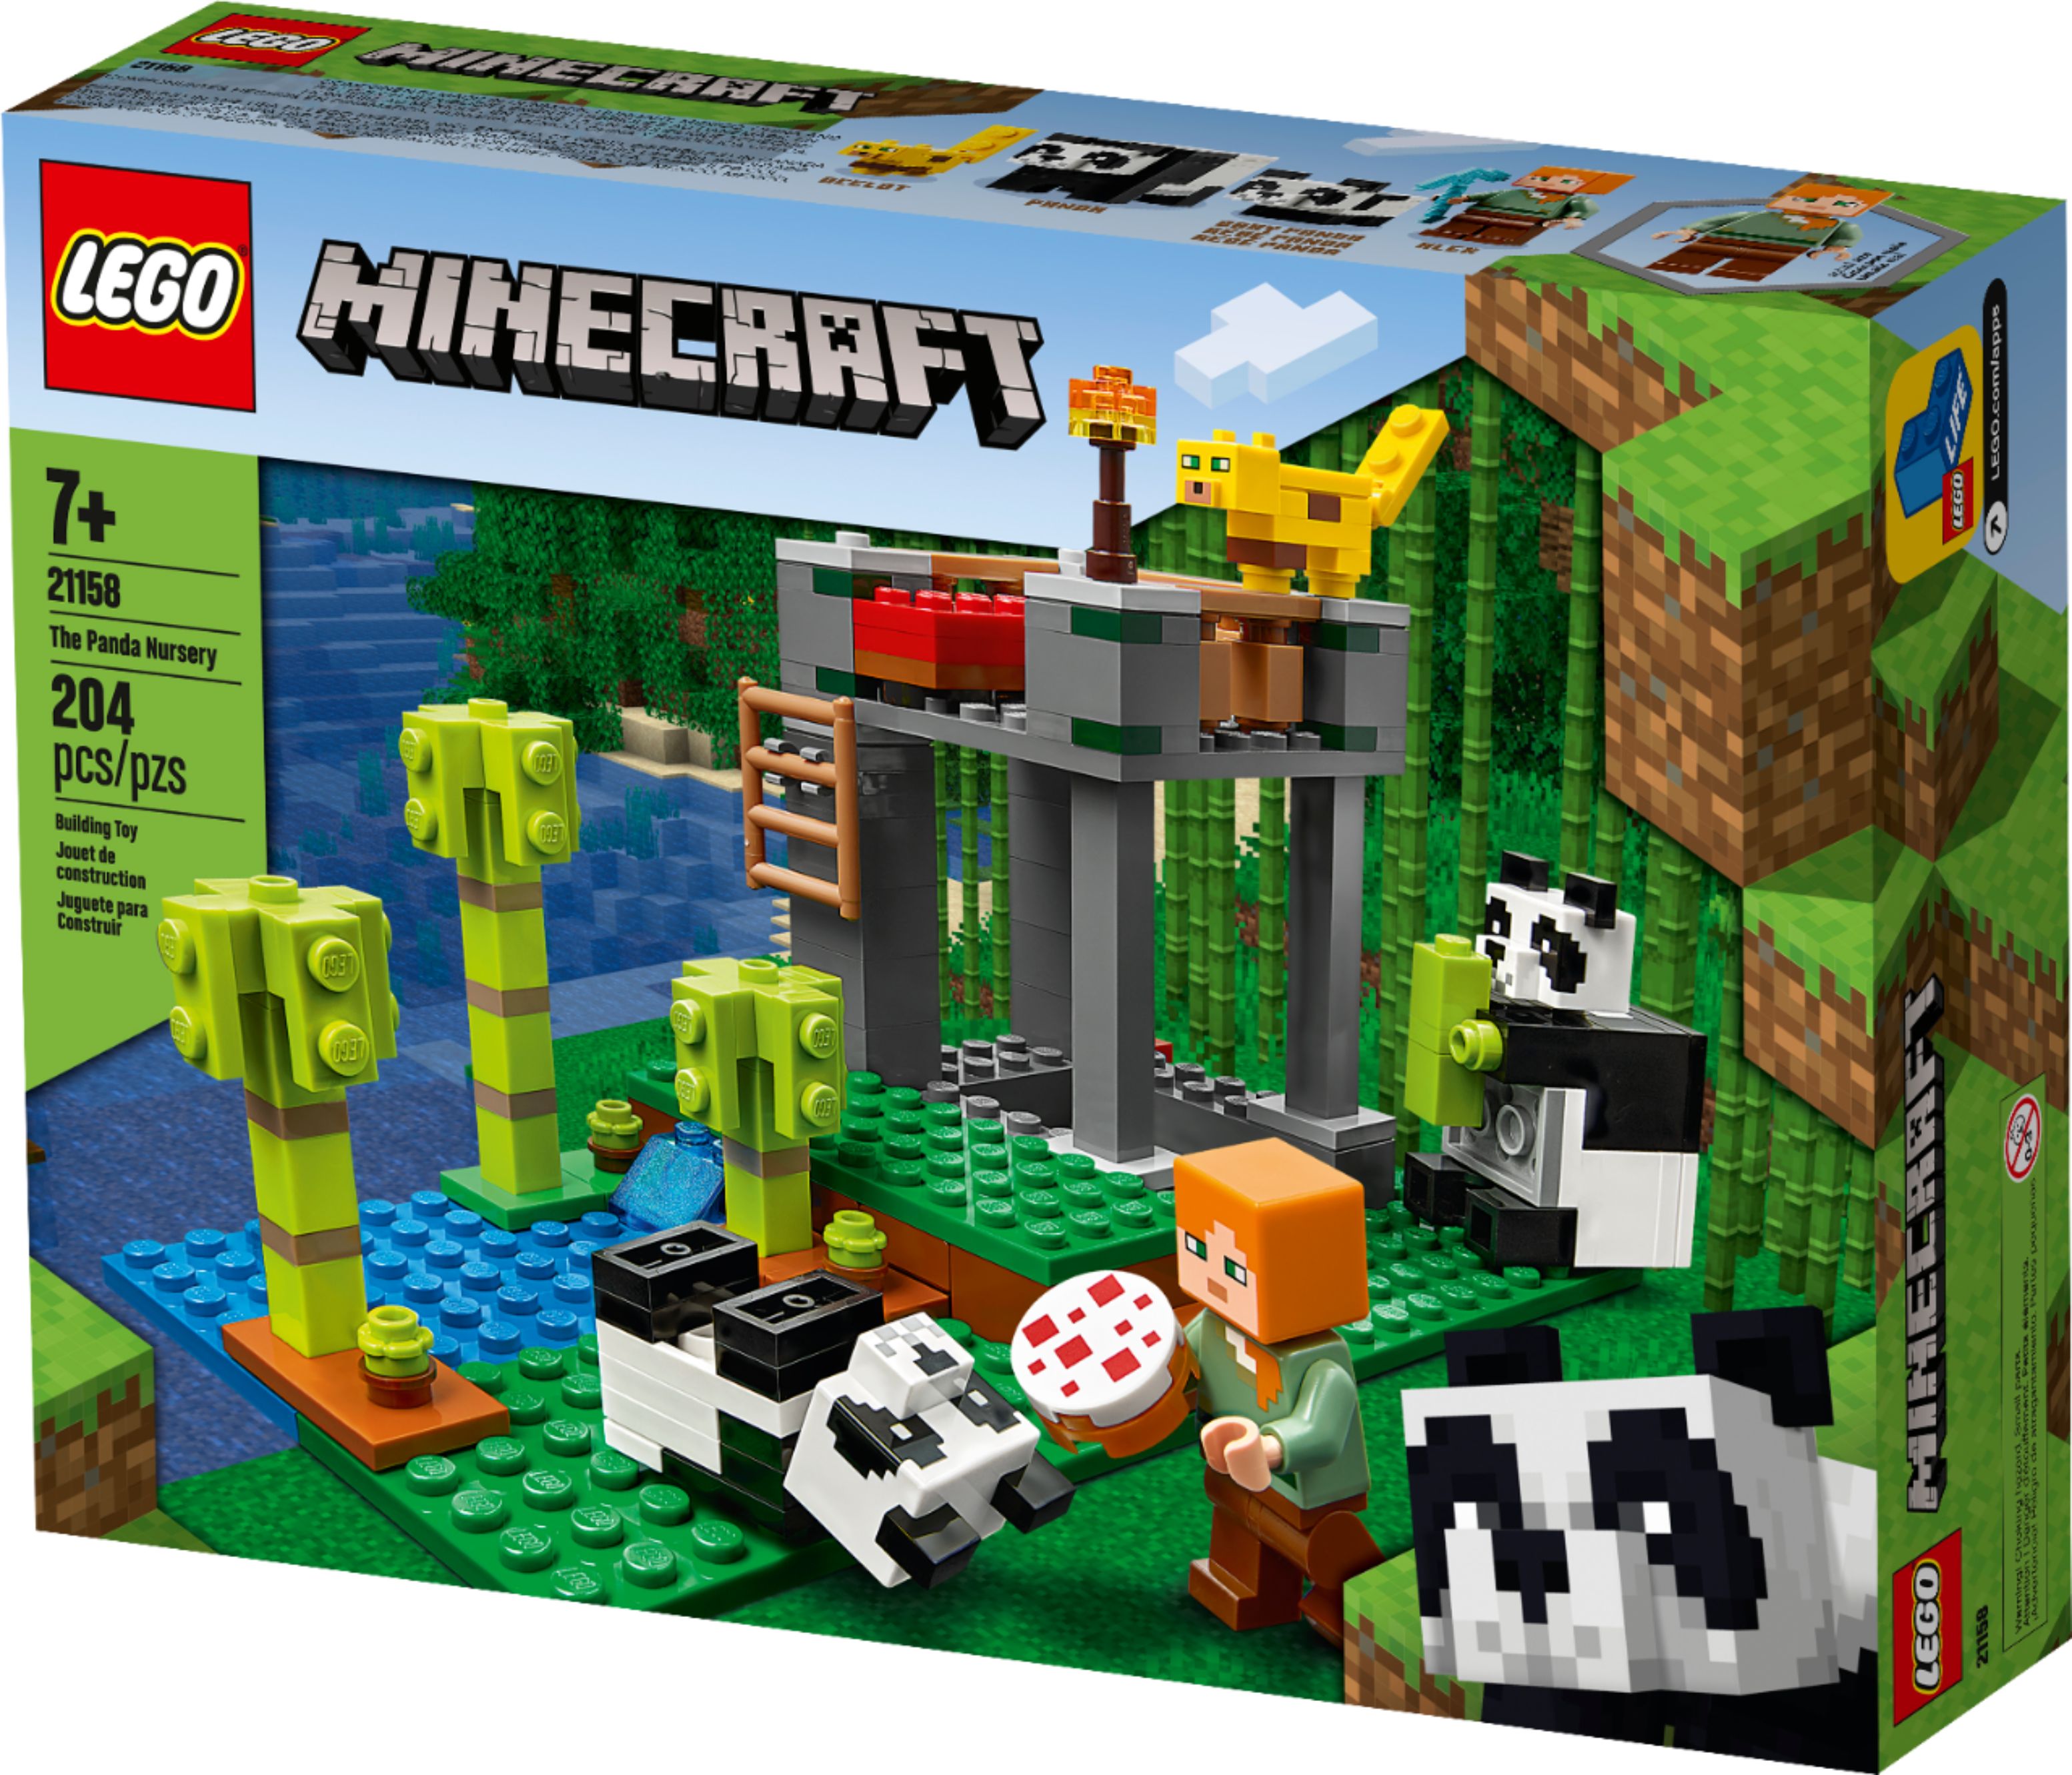 Best Buy: LEGO Minecraft Panda Nursery 21158 6288708